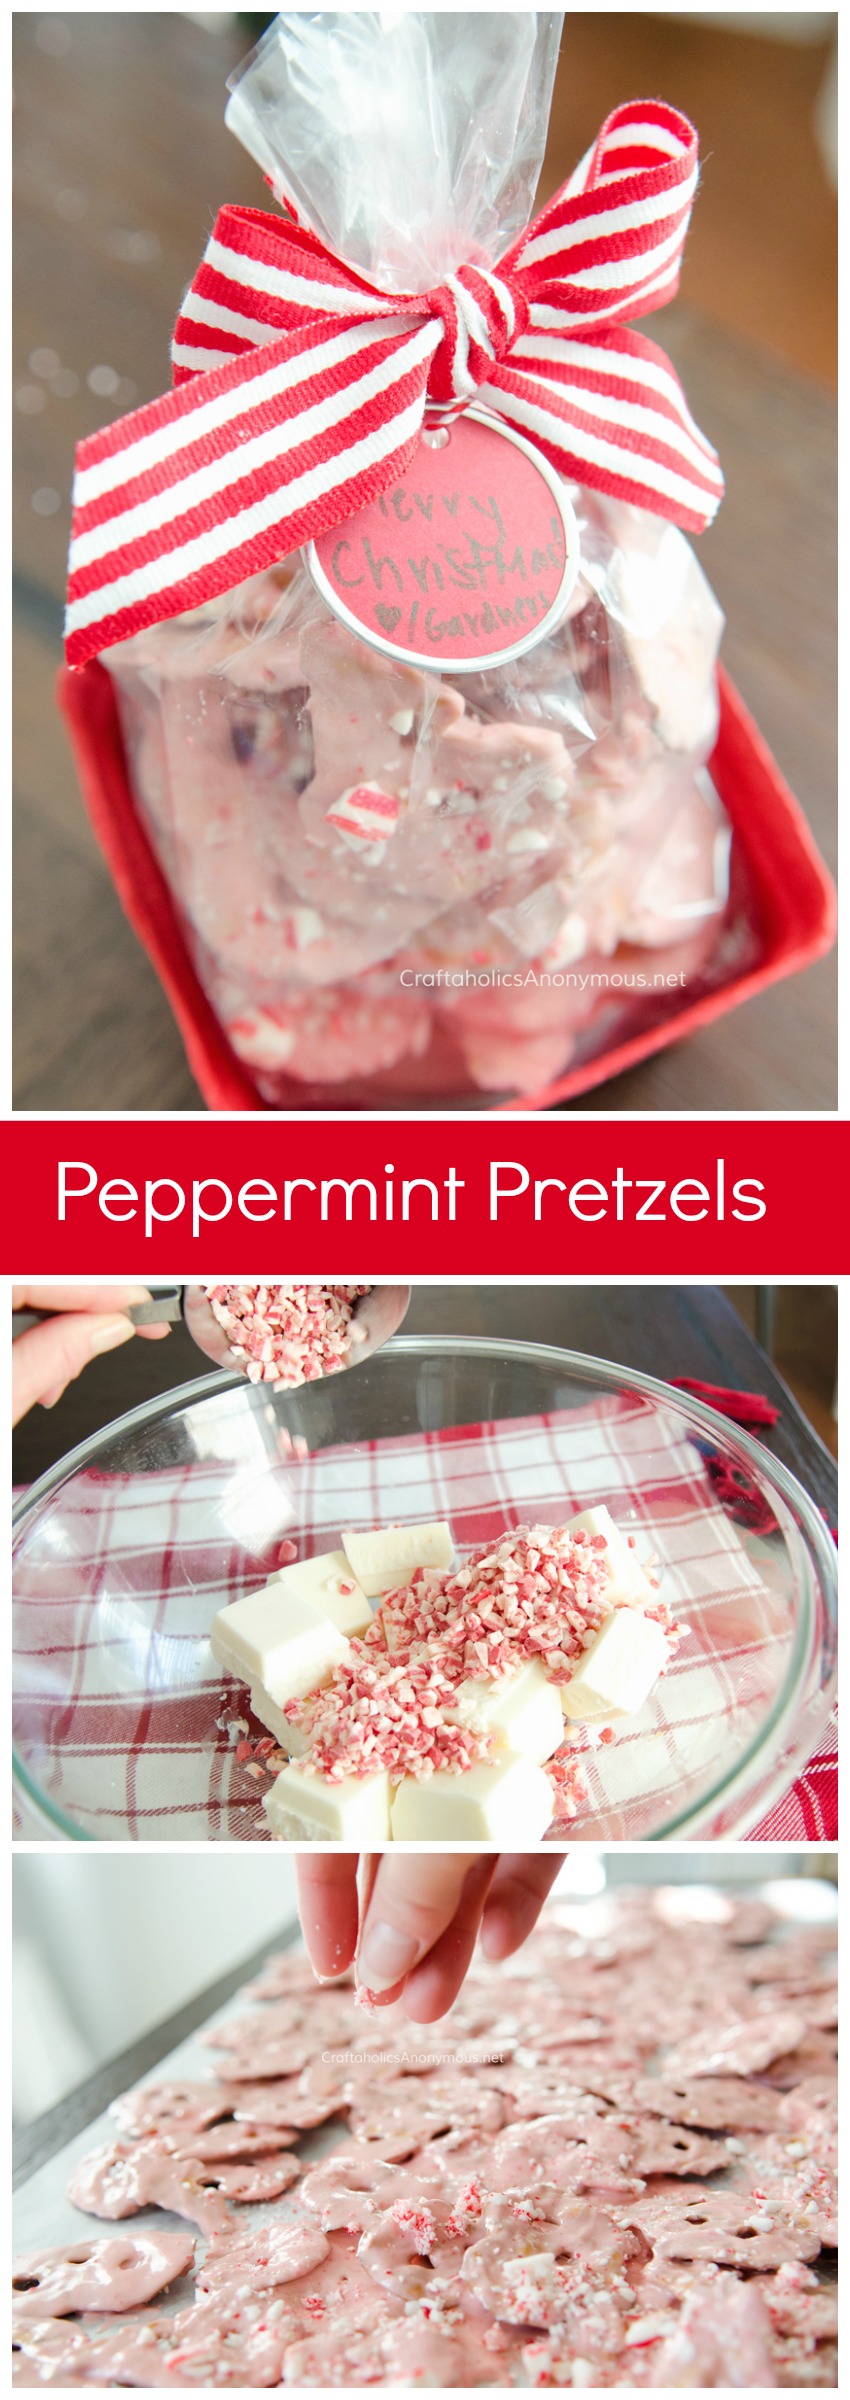 Peppermint Pretzels :: Delicious salty sweet Christmas treat! Make a wonderful handmade Christmas gift idea! 